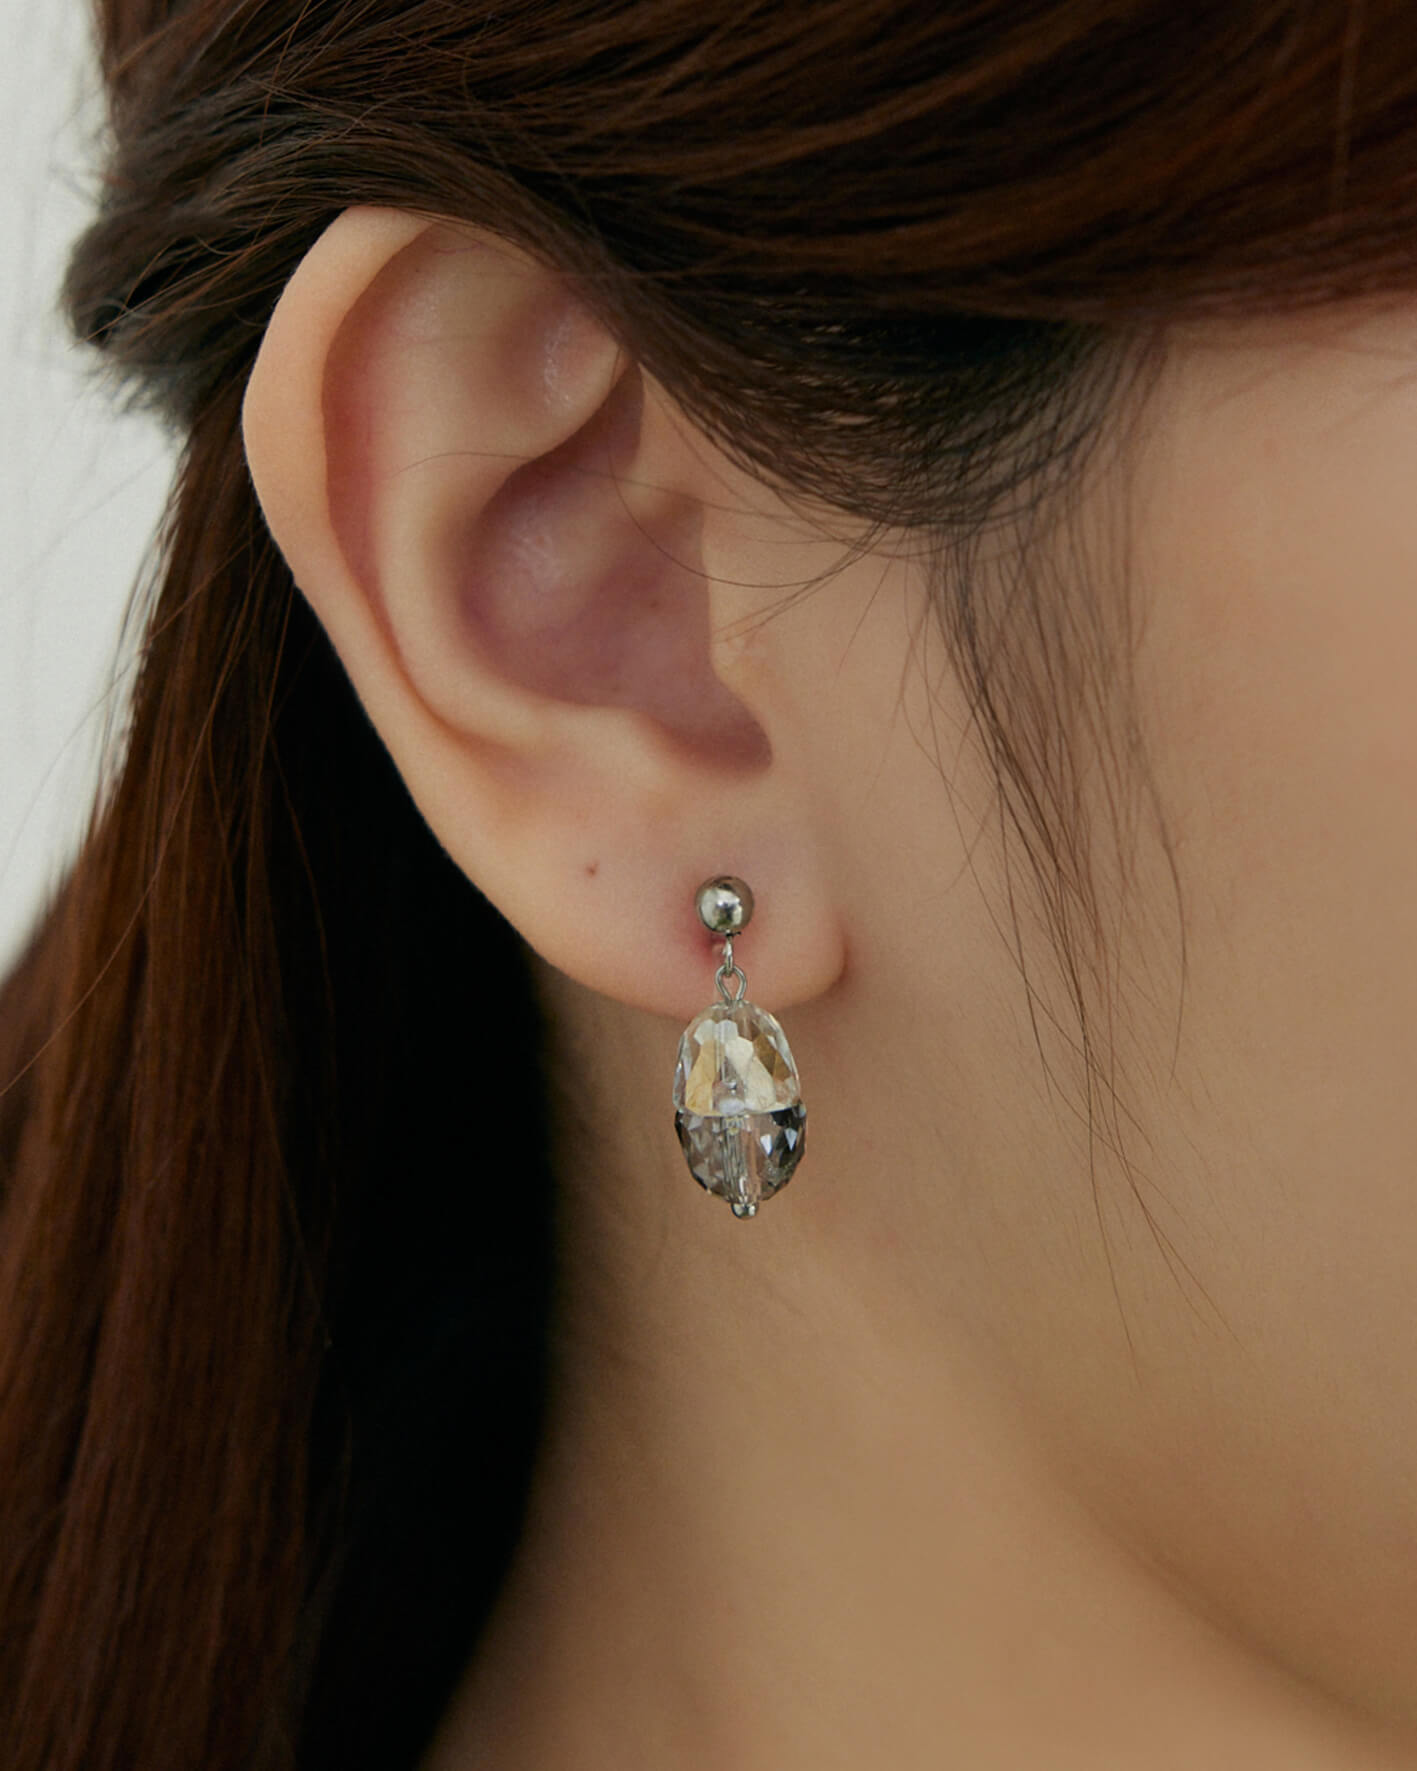 Eco安珂,韓國飾品,韓國耳環,耳針式耳環,矽膠夾耳環,透明耳夾耳環,無痛耳夾耳環,膠囊耳環